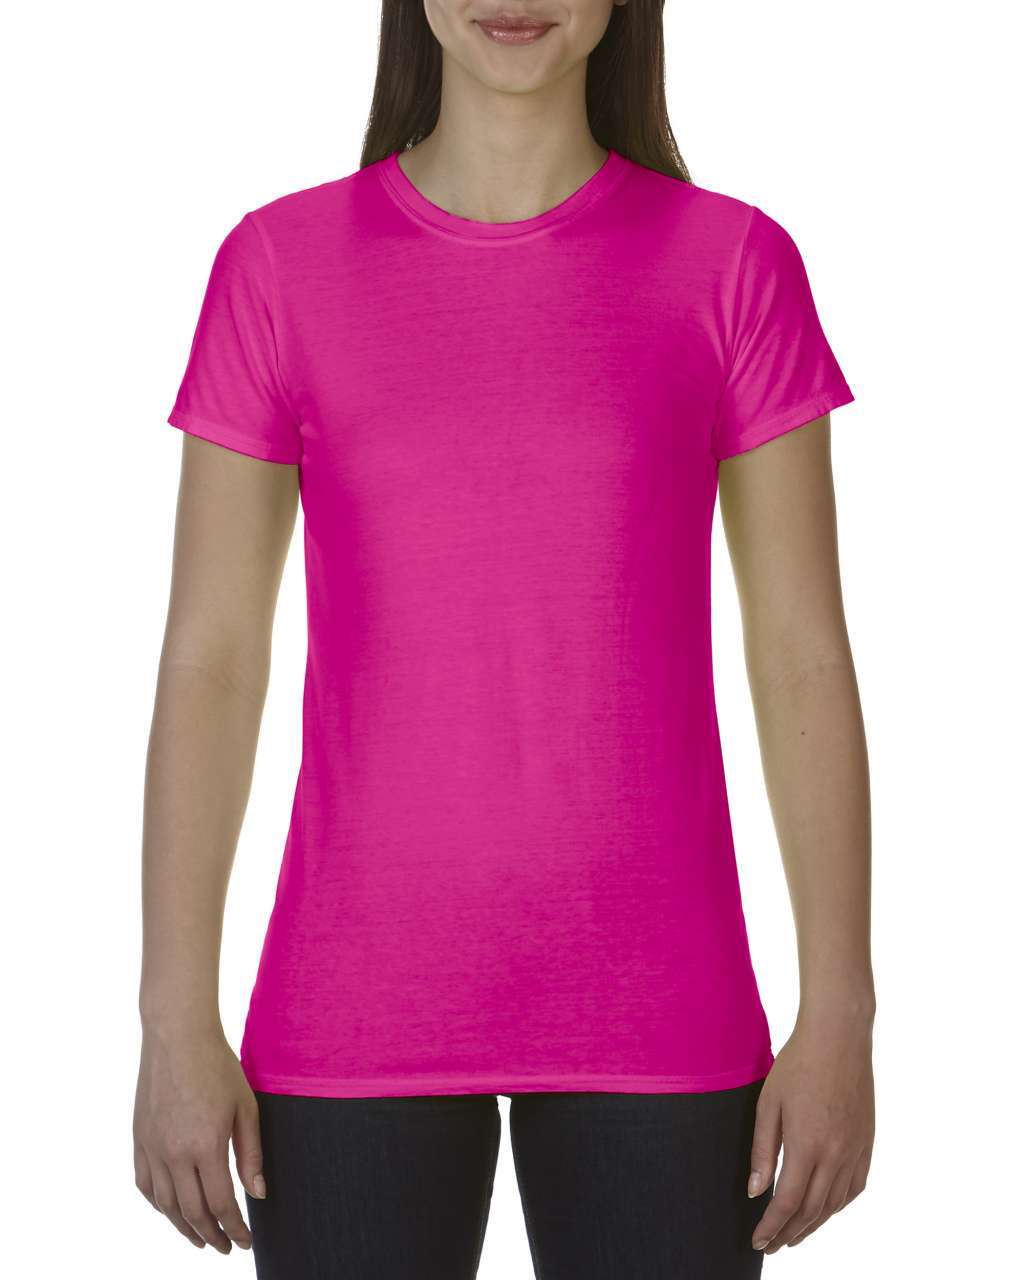 Comfort Colors Damen T-Shirt Oberteil Frauen Kurzarm Tshirt Rundhals